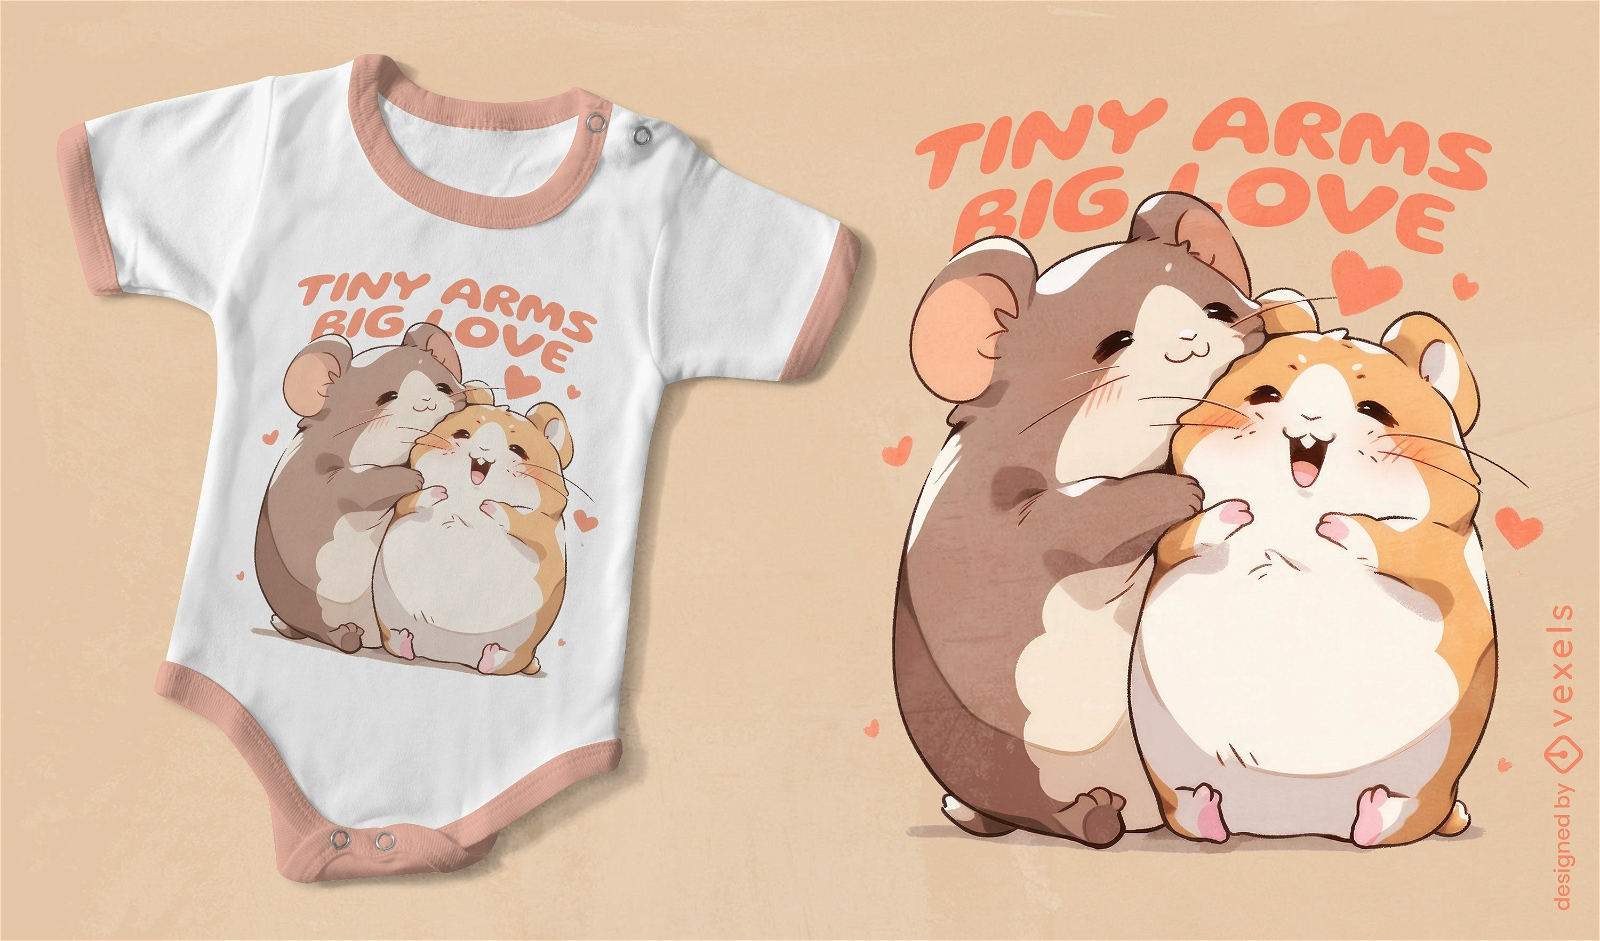 Cute hamster animal friends t-shirt psd